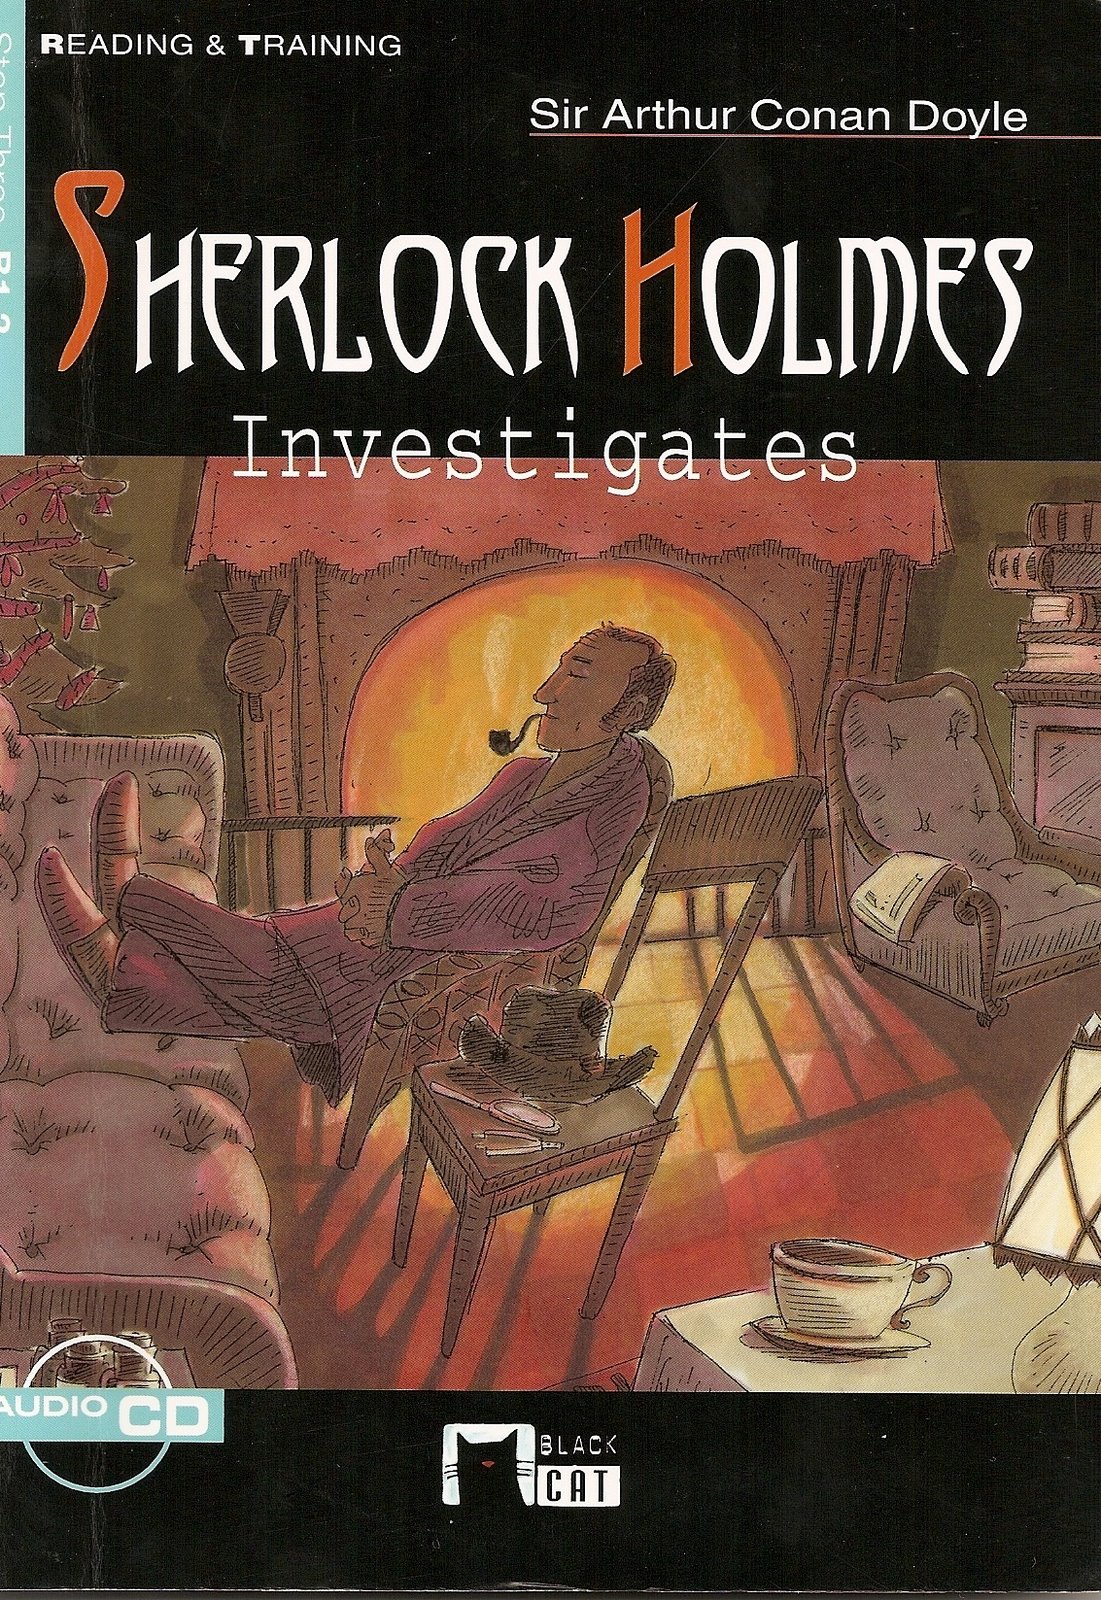 [Sherlock+Holmes+investigates.jpg]